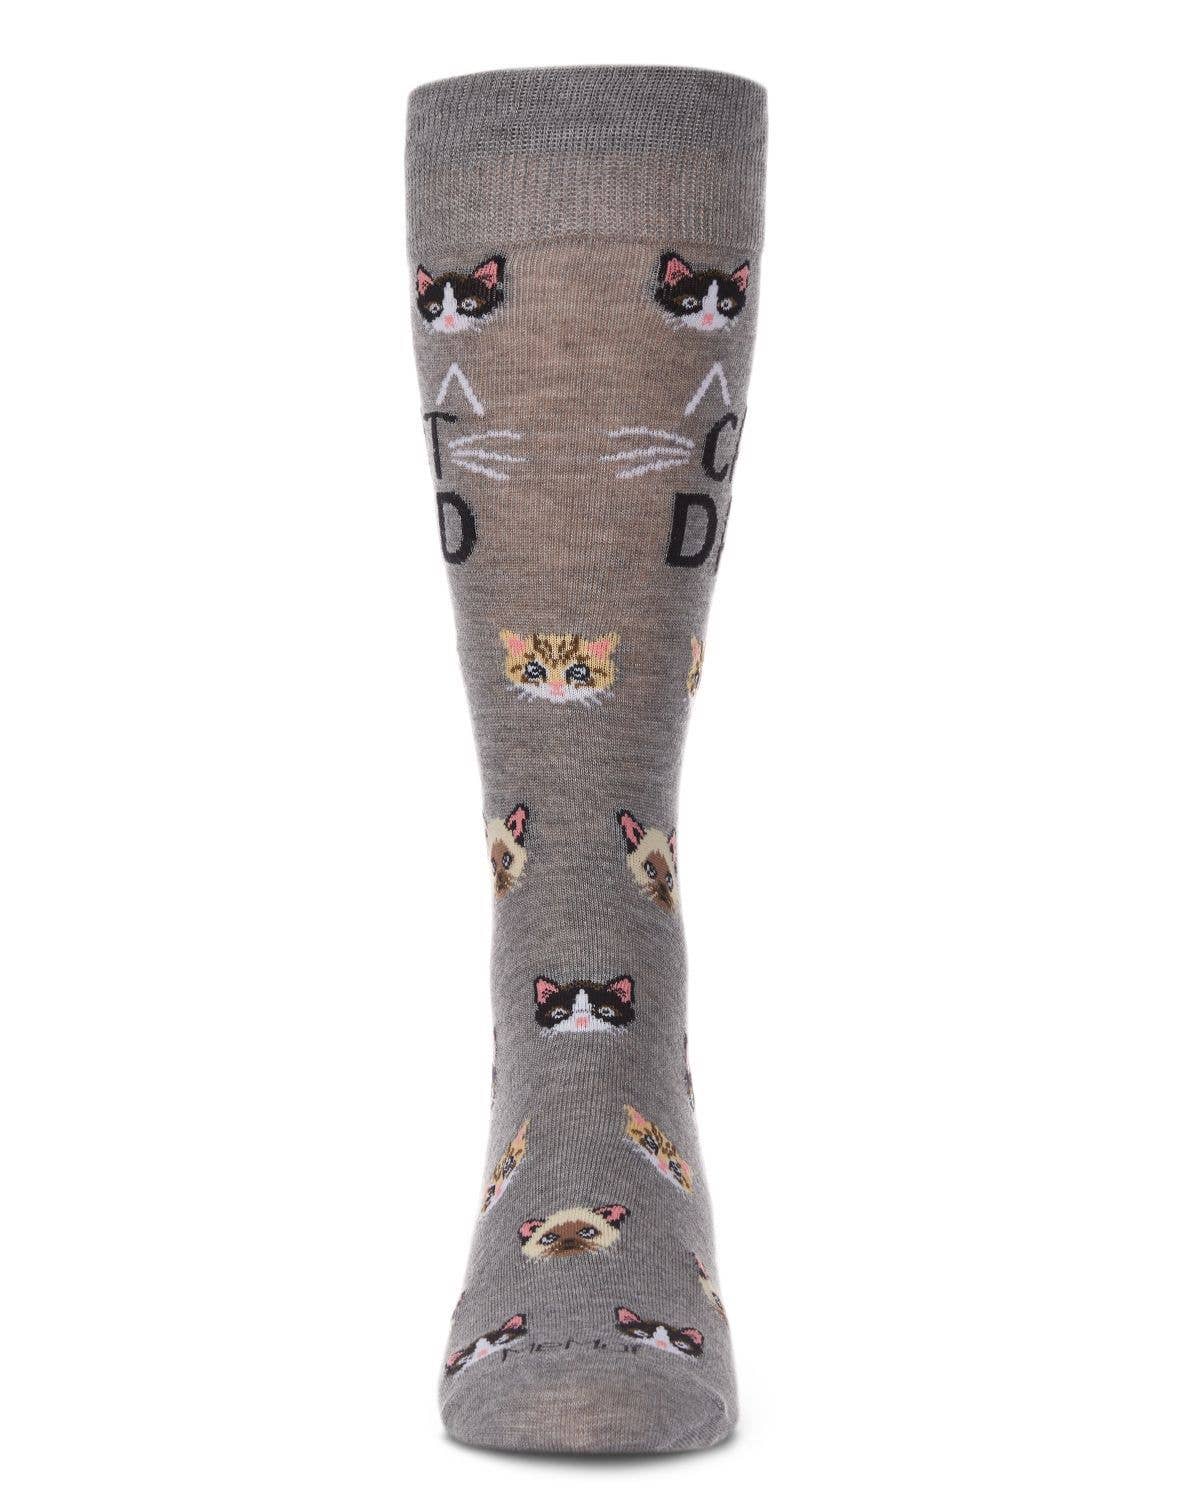 Cat Dad Bamboo Men's Socks - Heather Gray